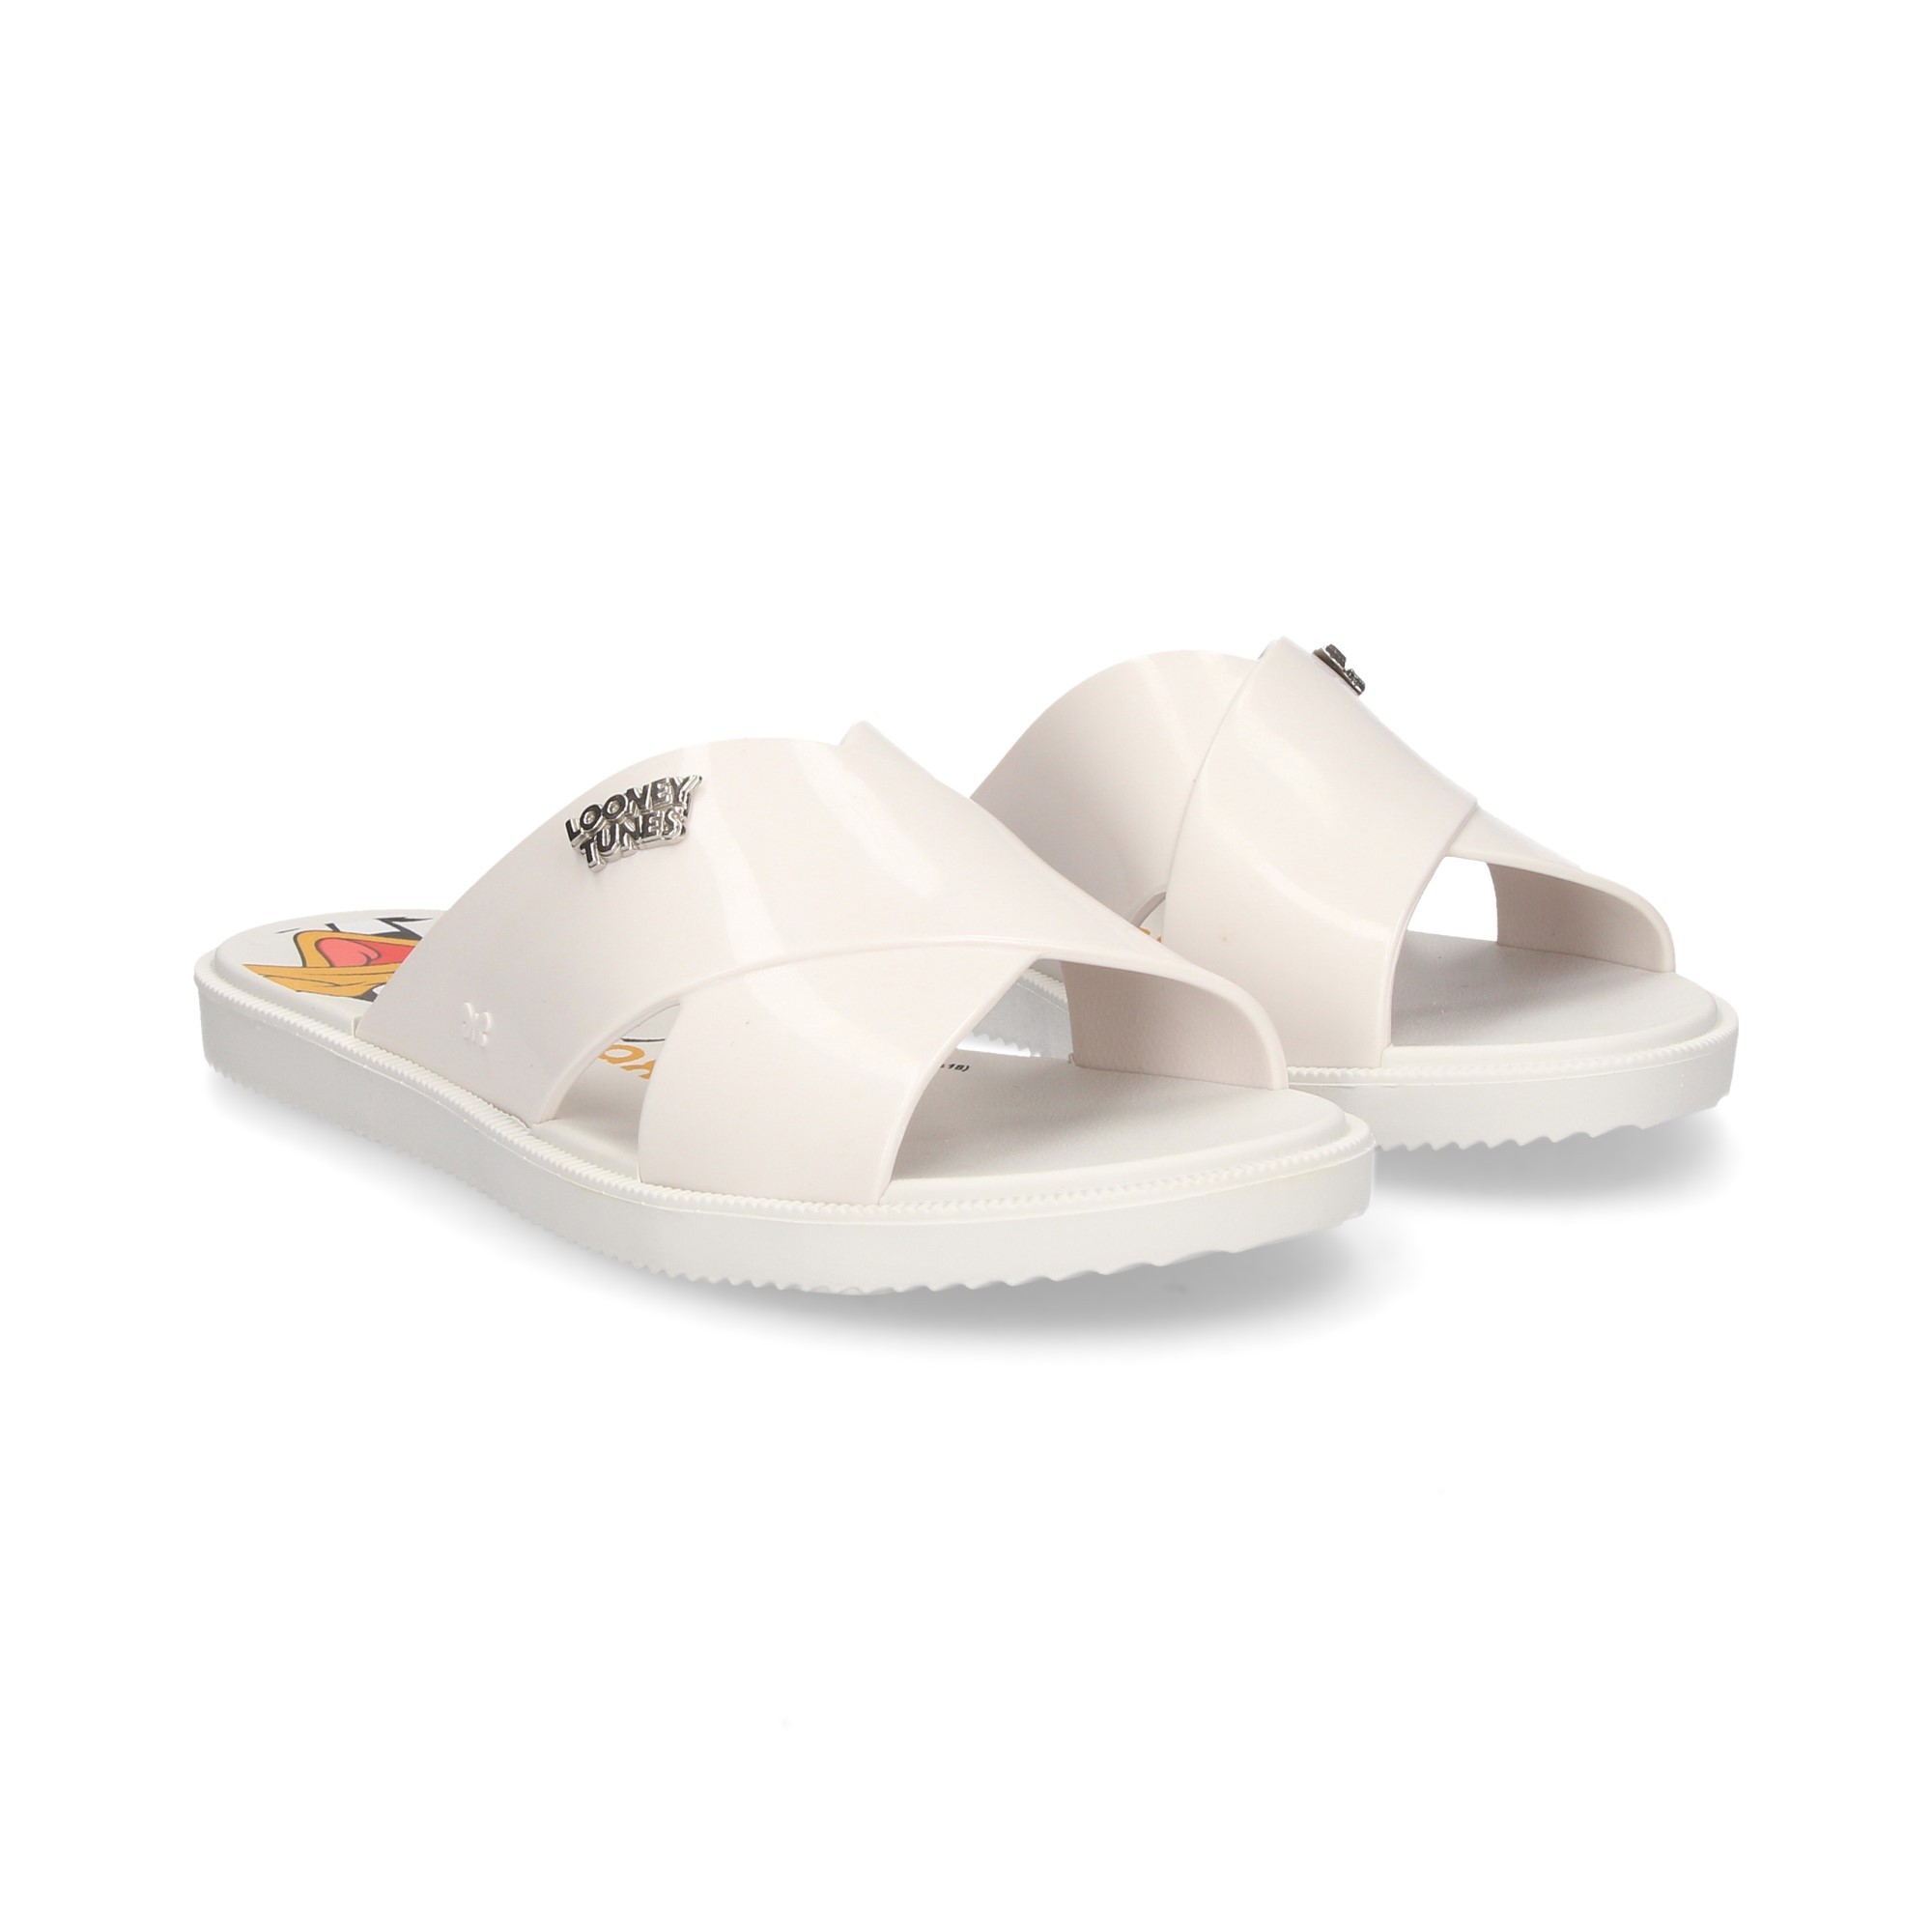 ZAXY Women's Flat sandals 17762 90060